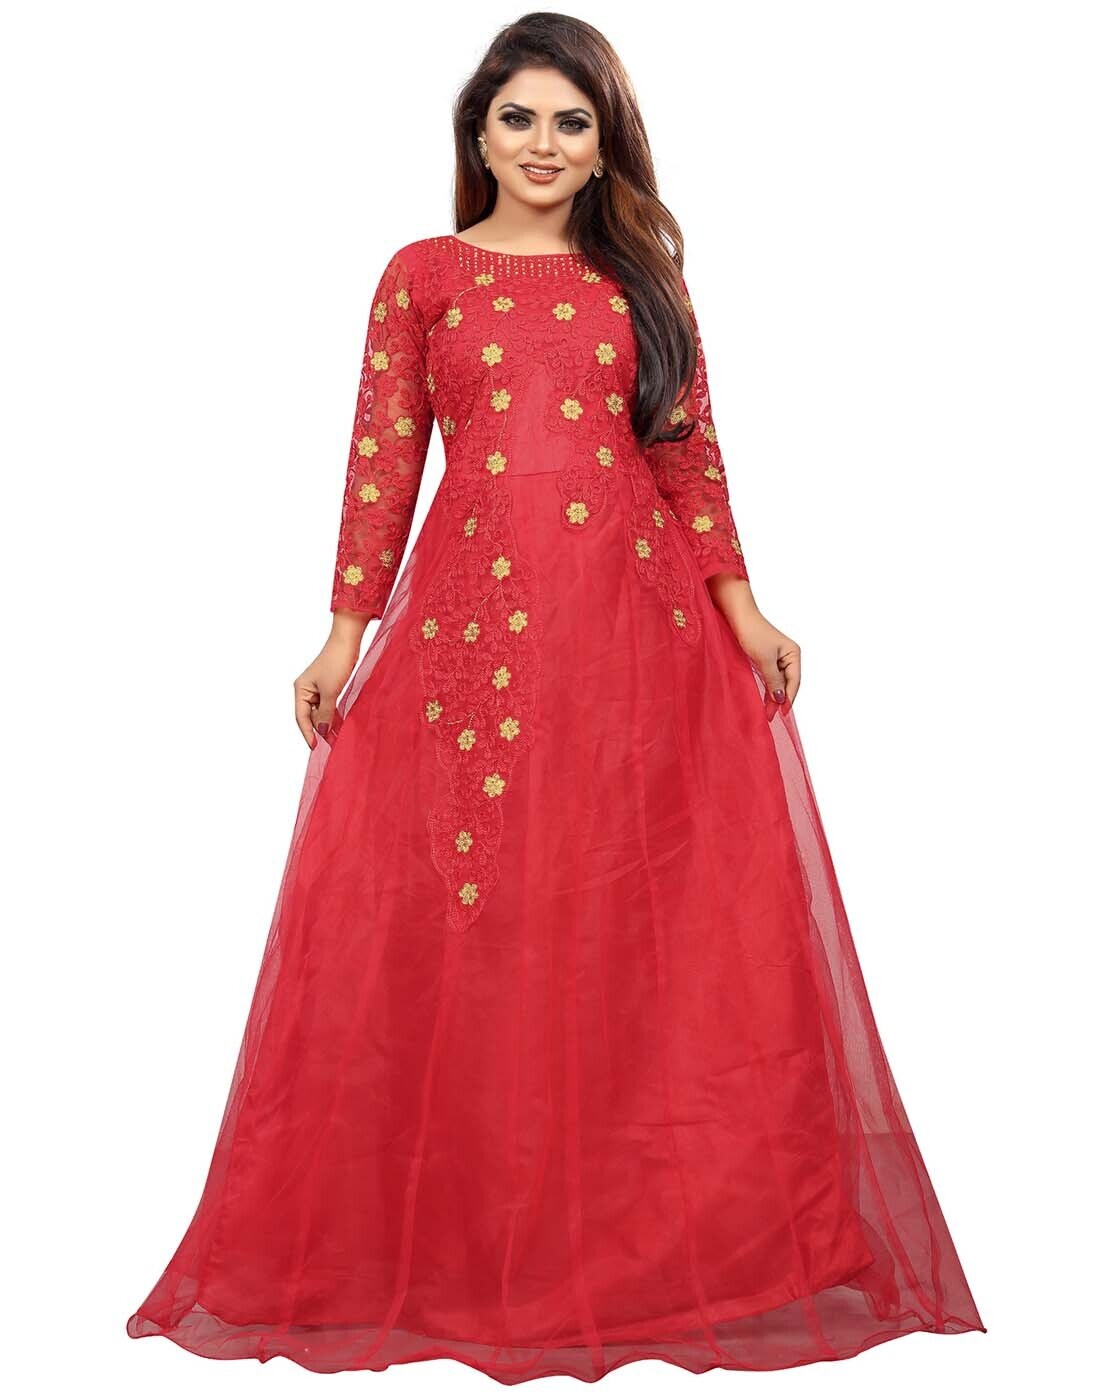 AJIO & Myntra Summer Dresses Haul | What I Ordered Vs What I Got Under Rs  700 HZ Bought #herzindagi - YouTube